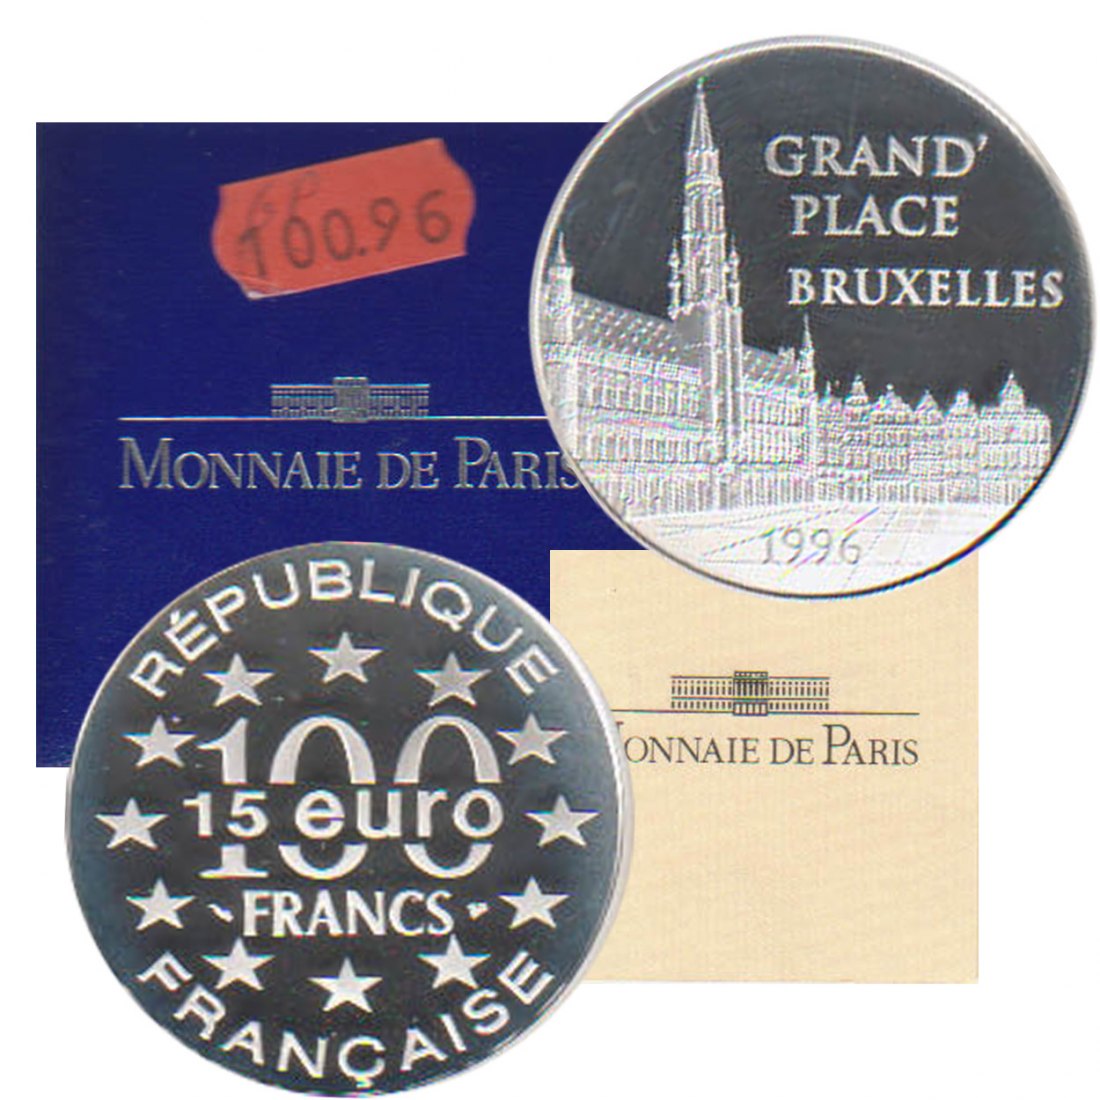  Frankreich 15-Euro-Silbermünze *Grand Palace in Brüssel* 1996 *PP*   